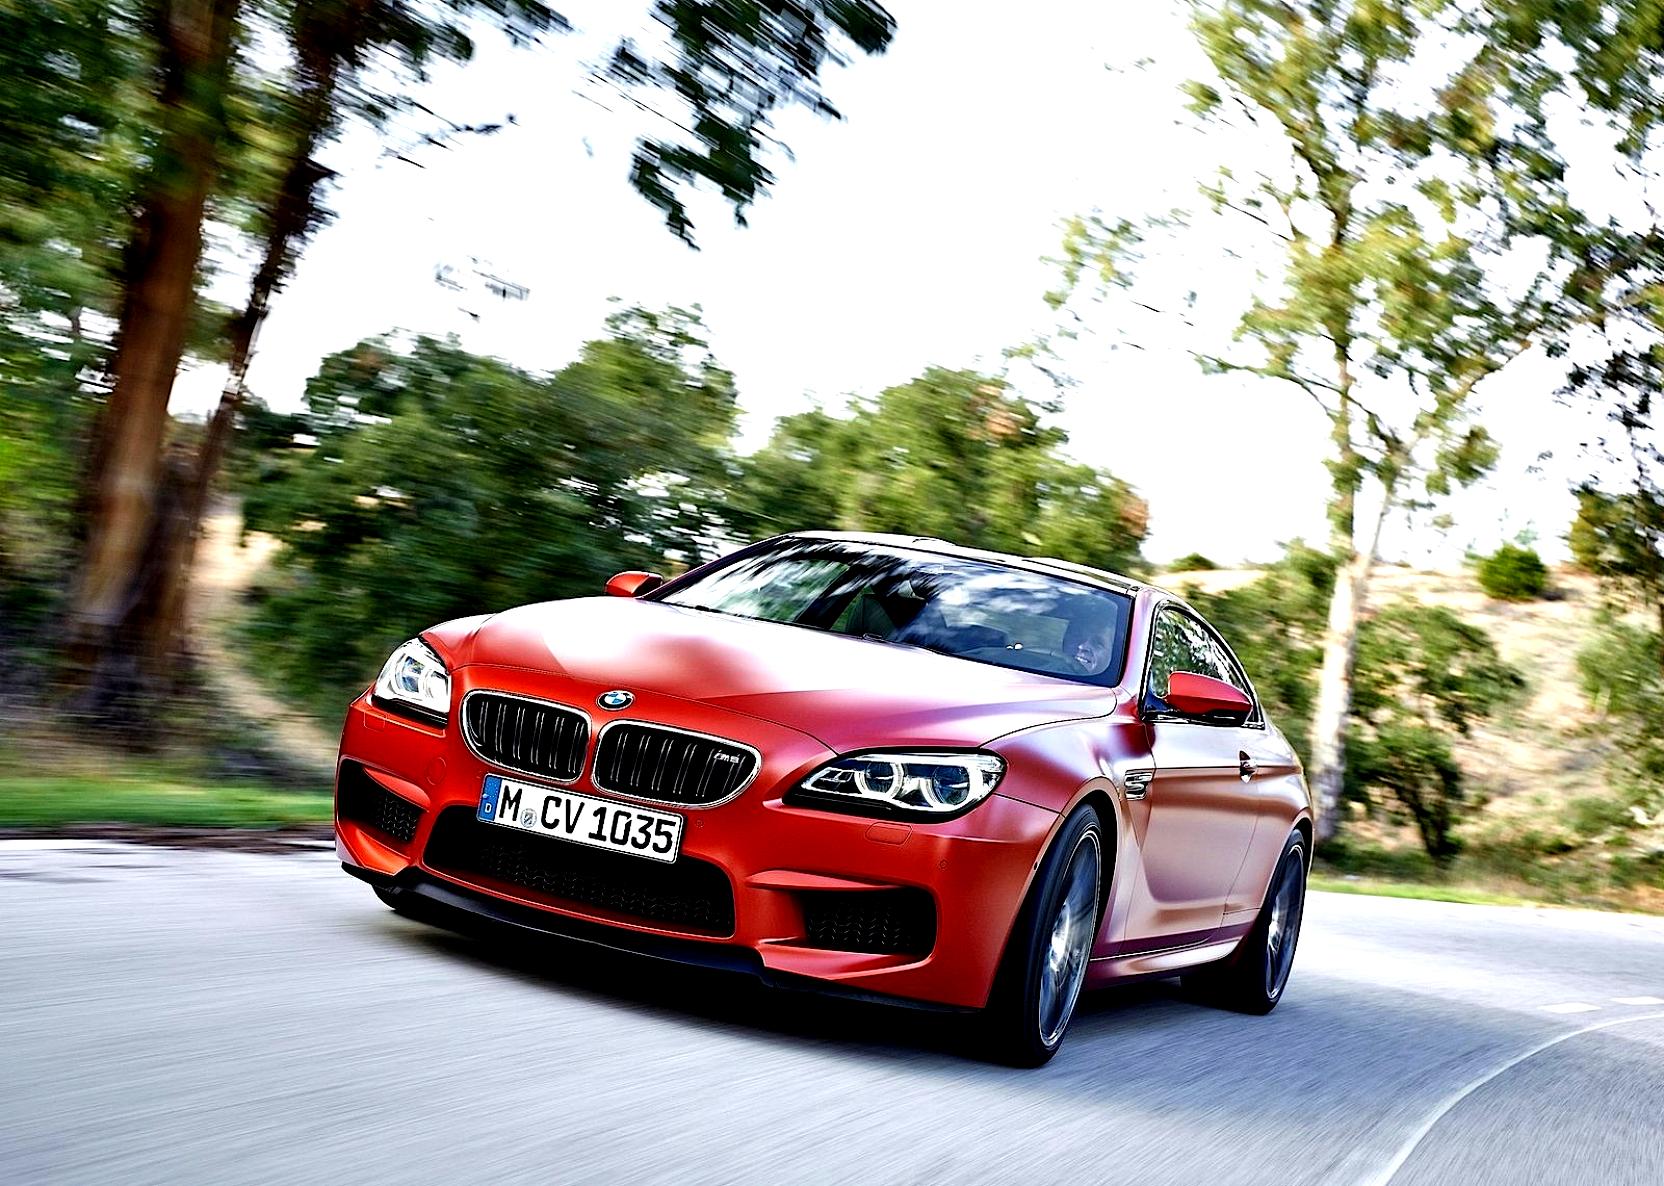 BMW M6 Coupe LCI 2014 #31